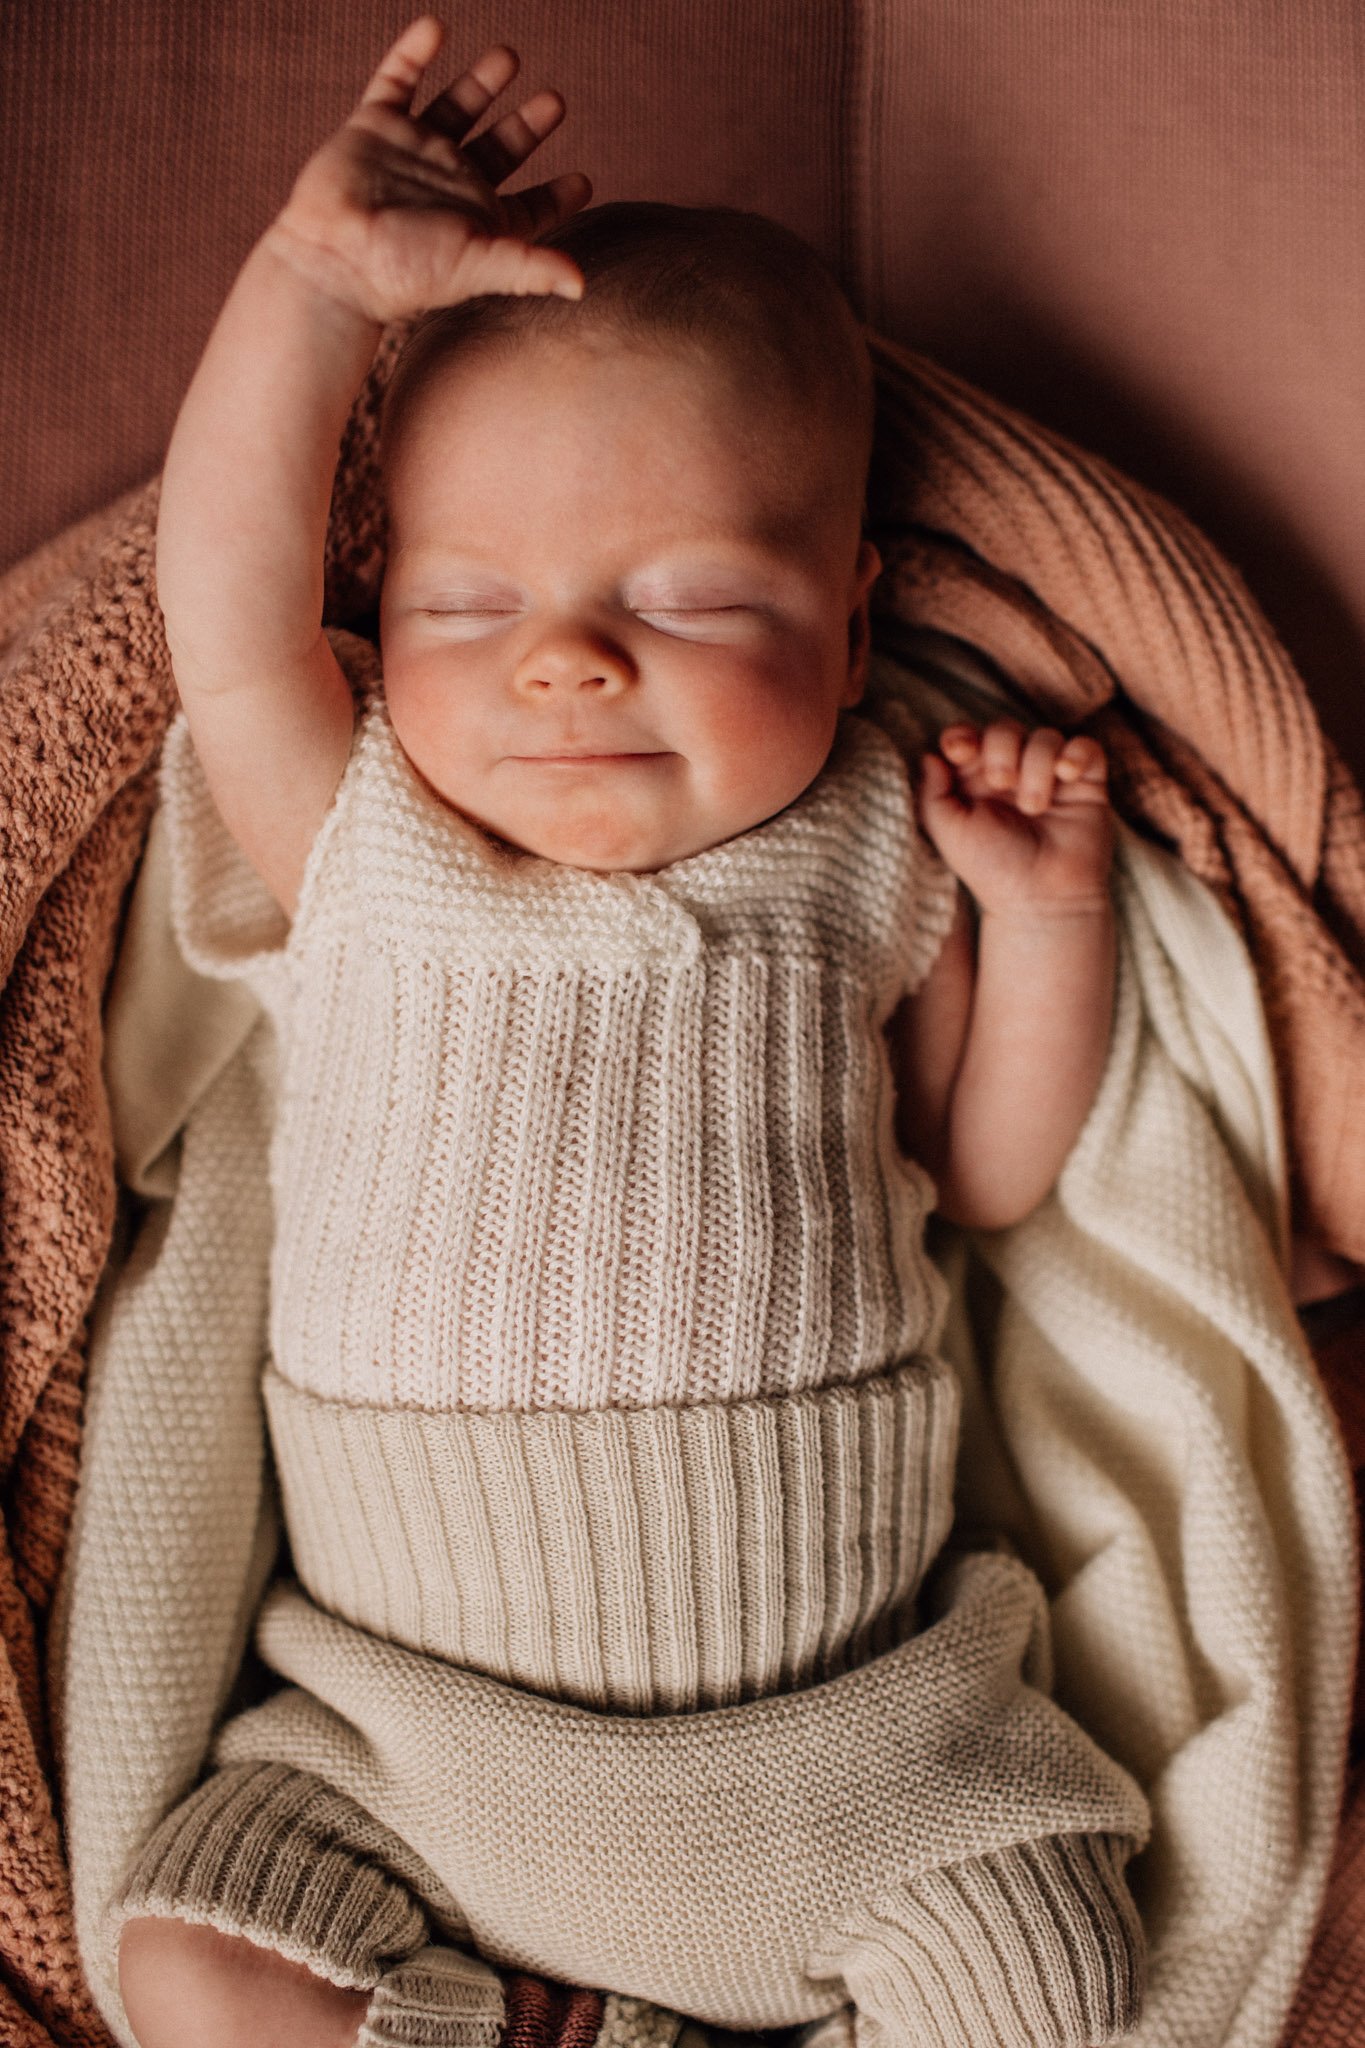 geelong-newborn-photographer-stretching-infant.jpg